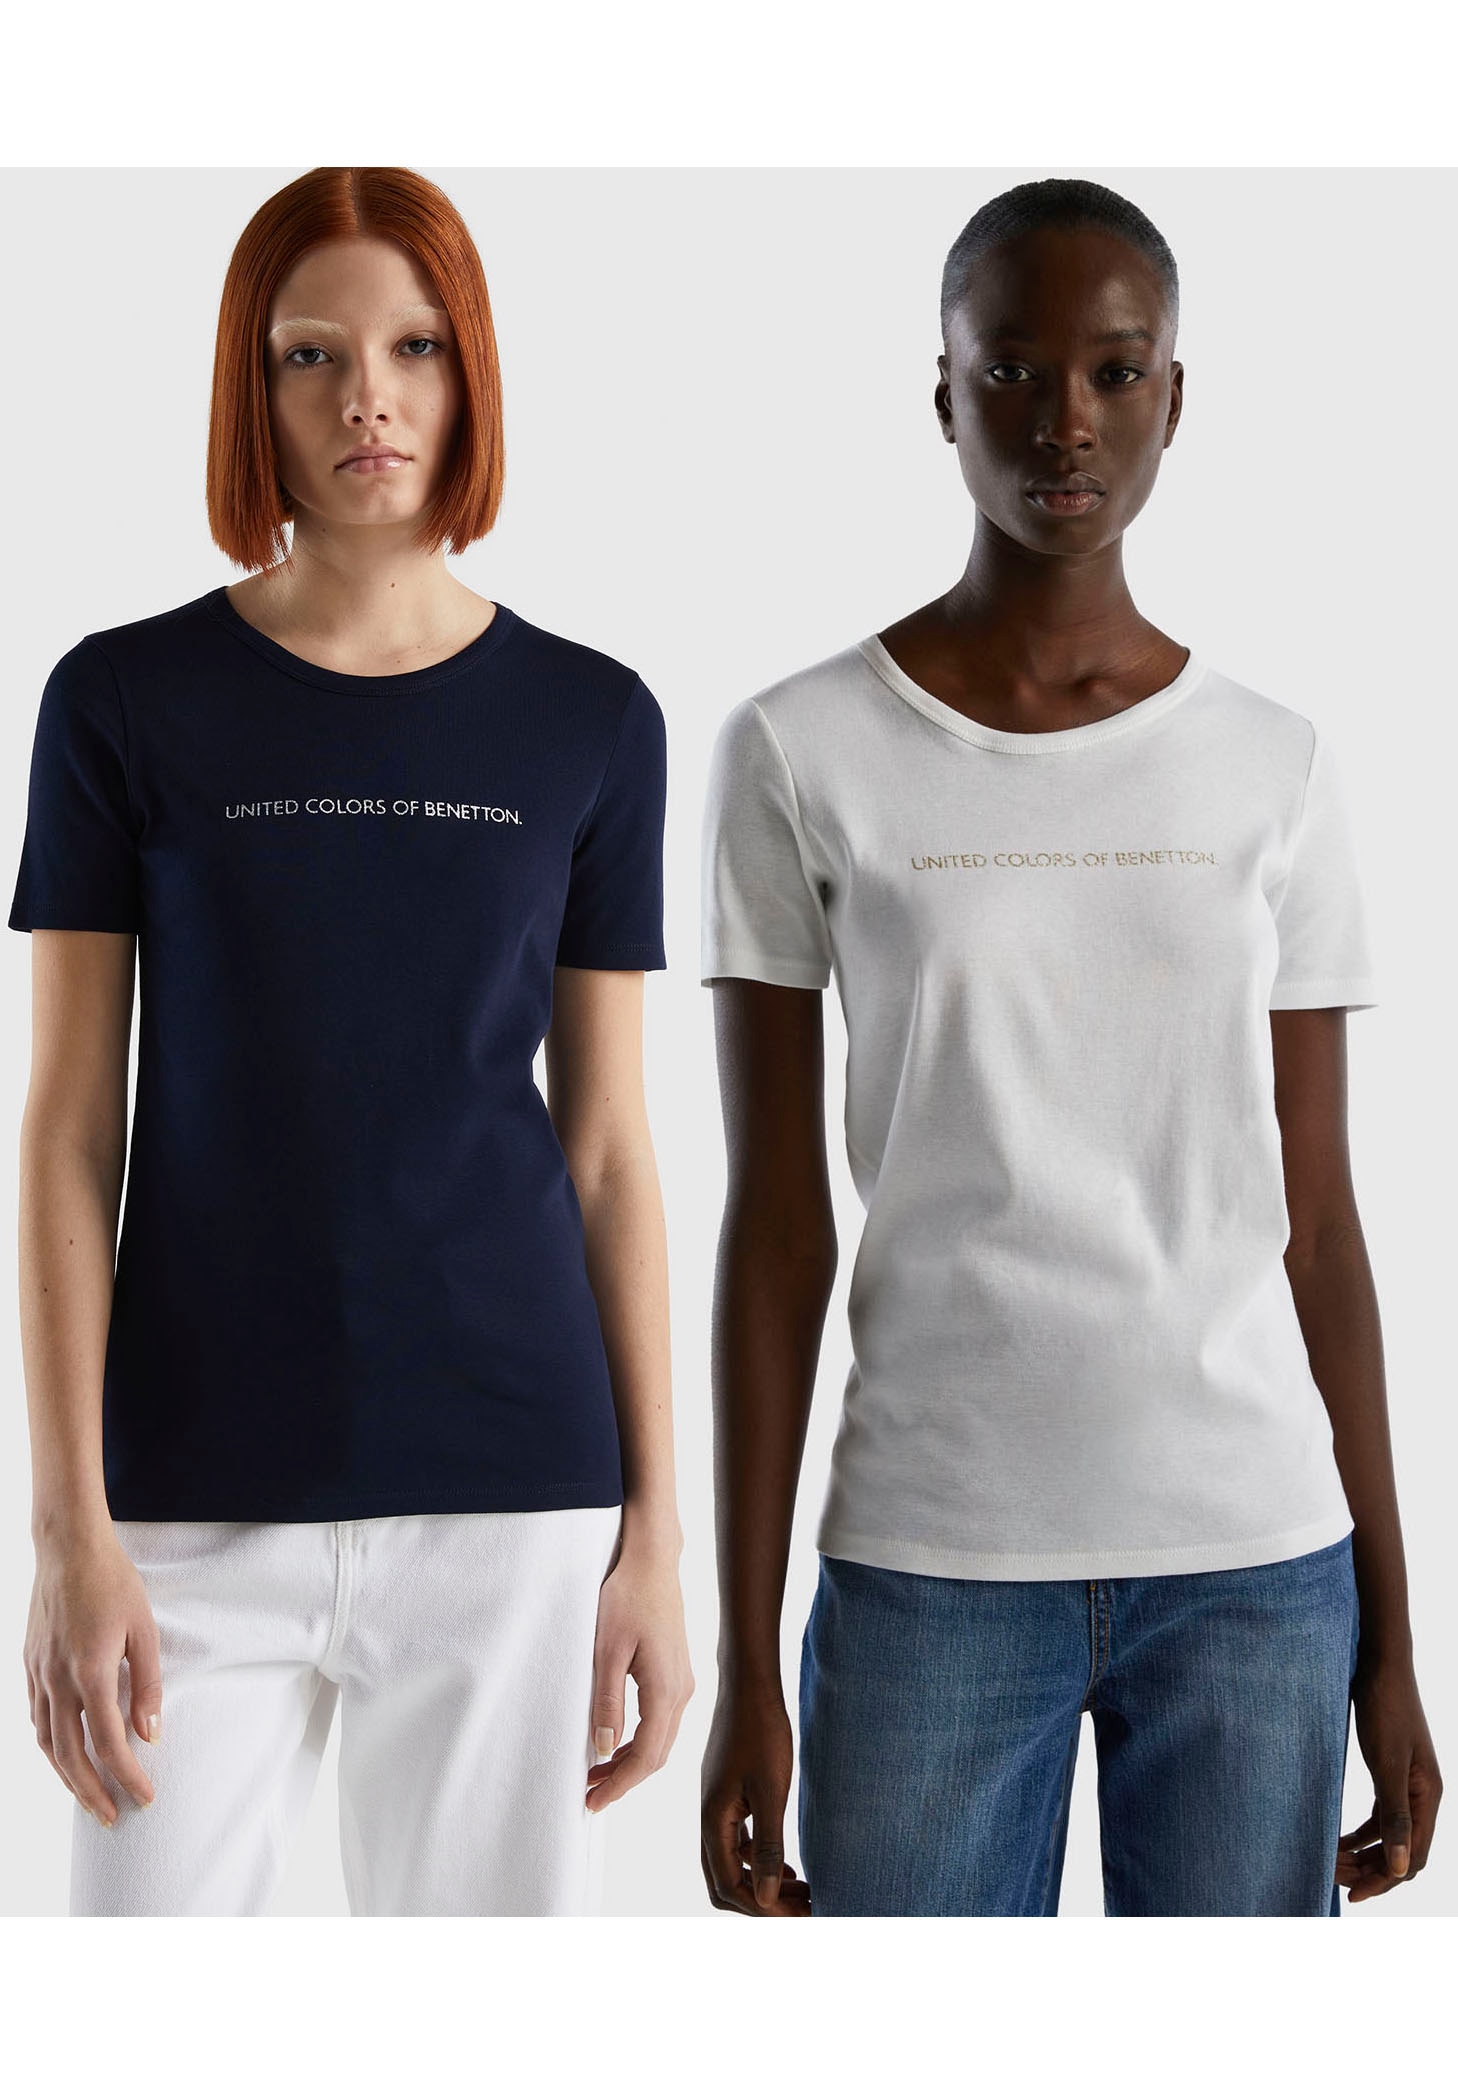 | United 2 unsere 2), T-Shirt, tlg., bestellen im of Benetton (Set, BAUR Bestseller Colors Doppelpack